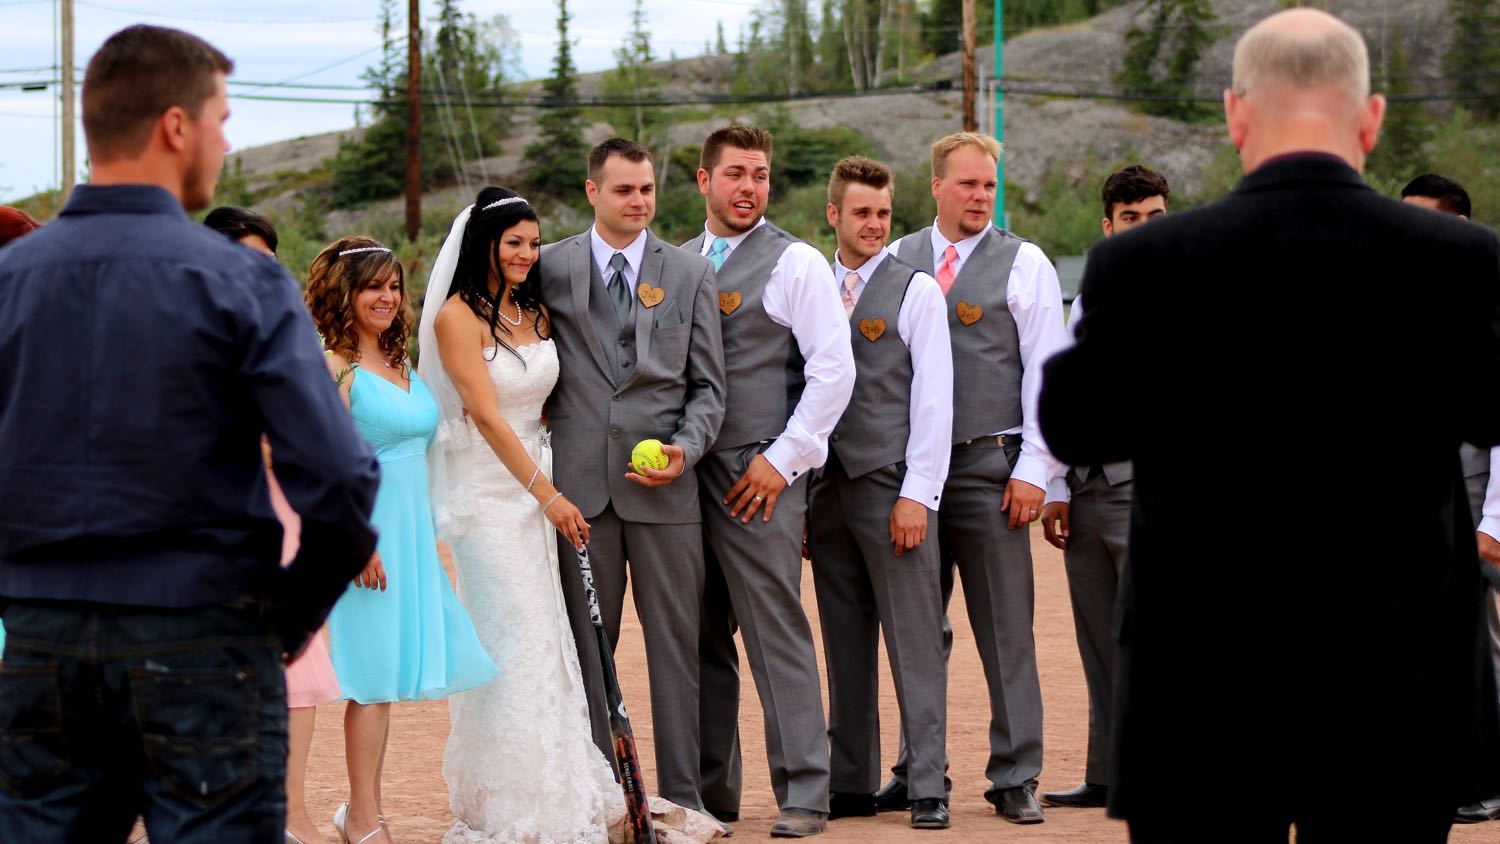 Wedding party plays softball